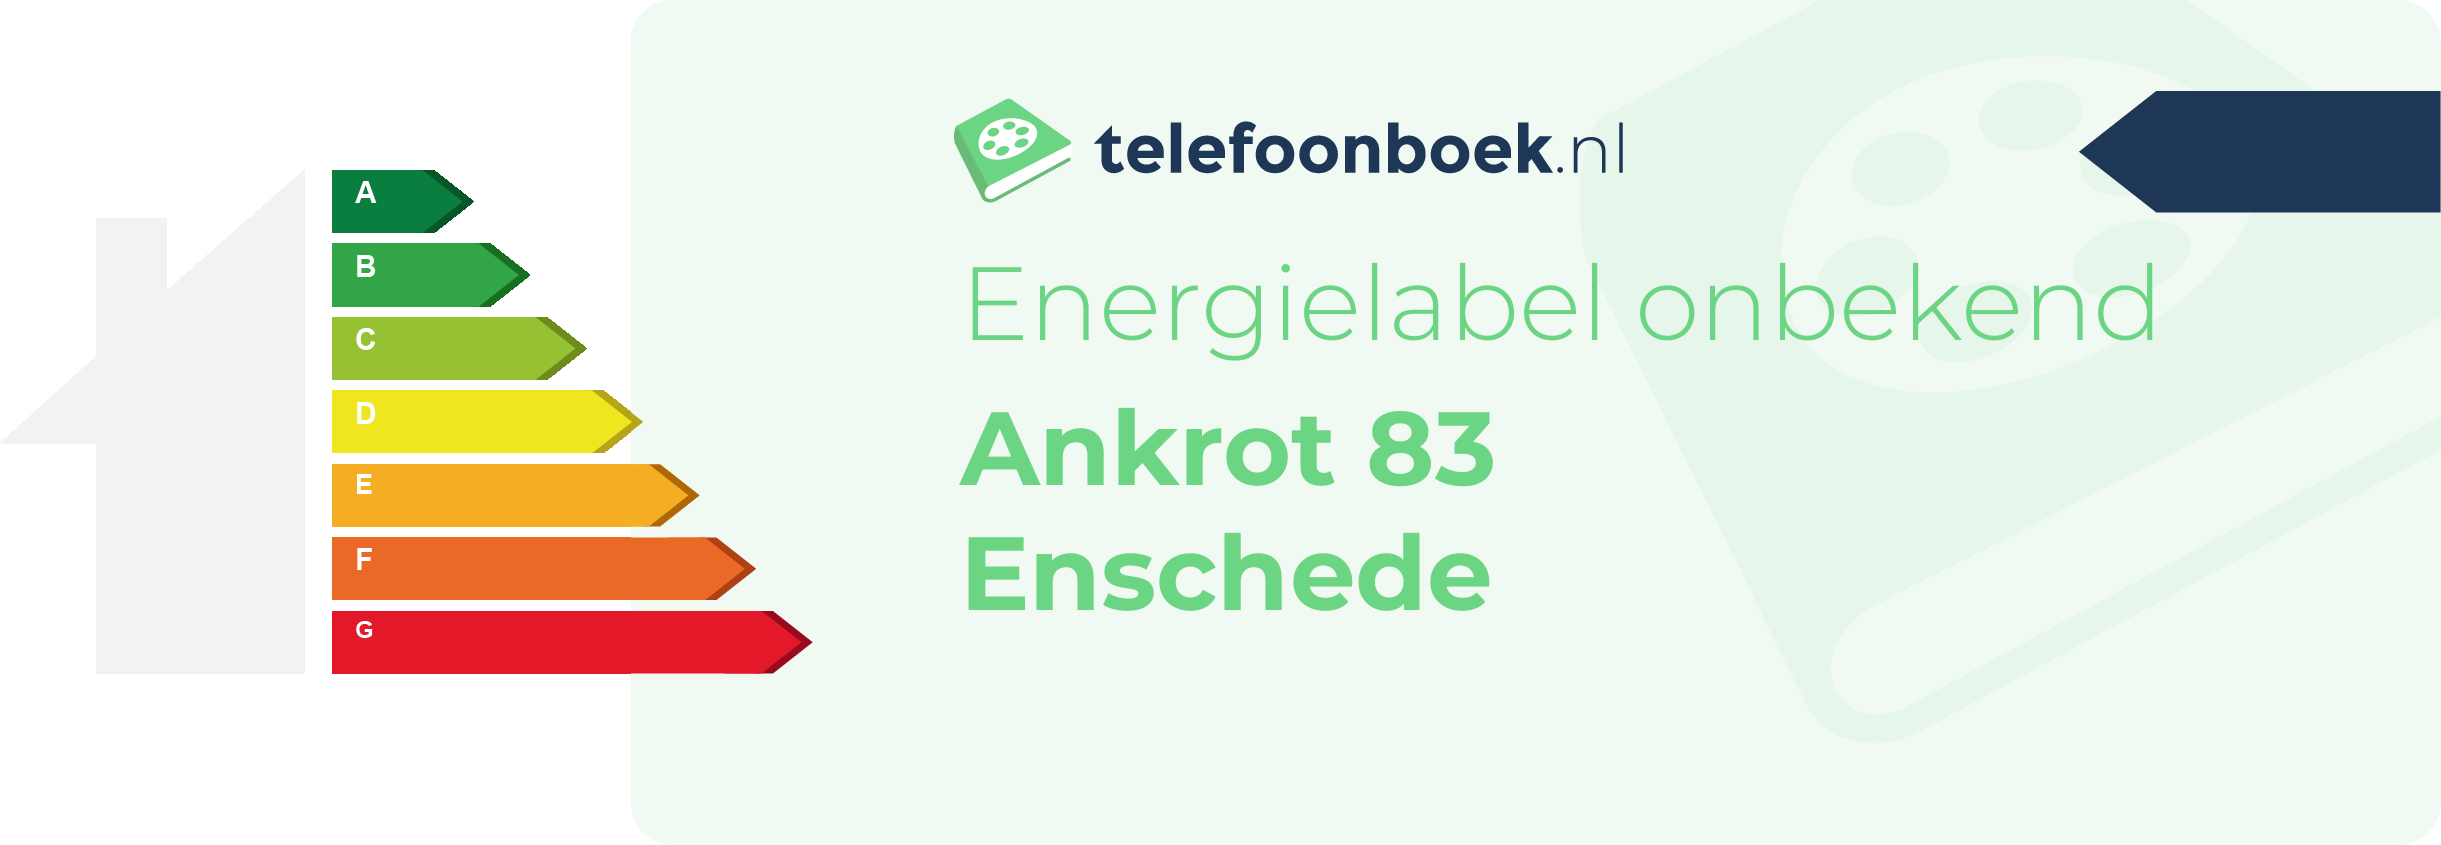 Energielabel Ankrot 83 Enschede